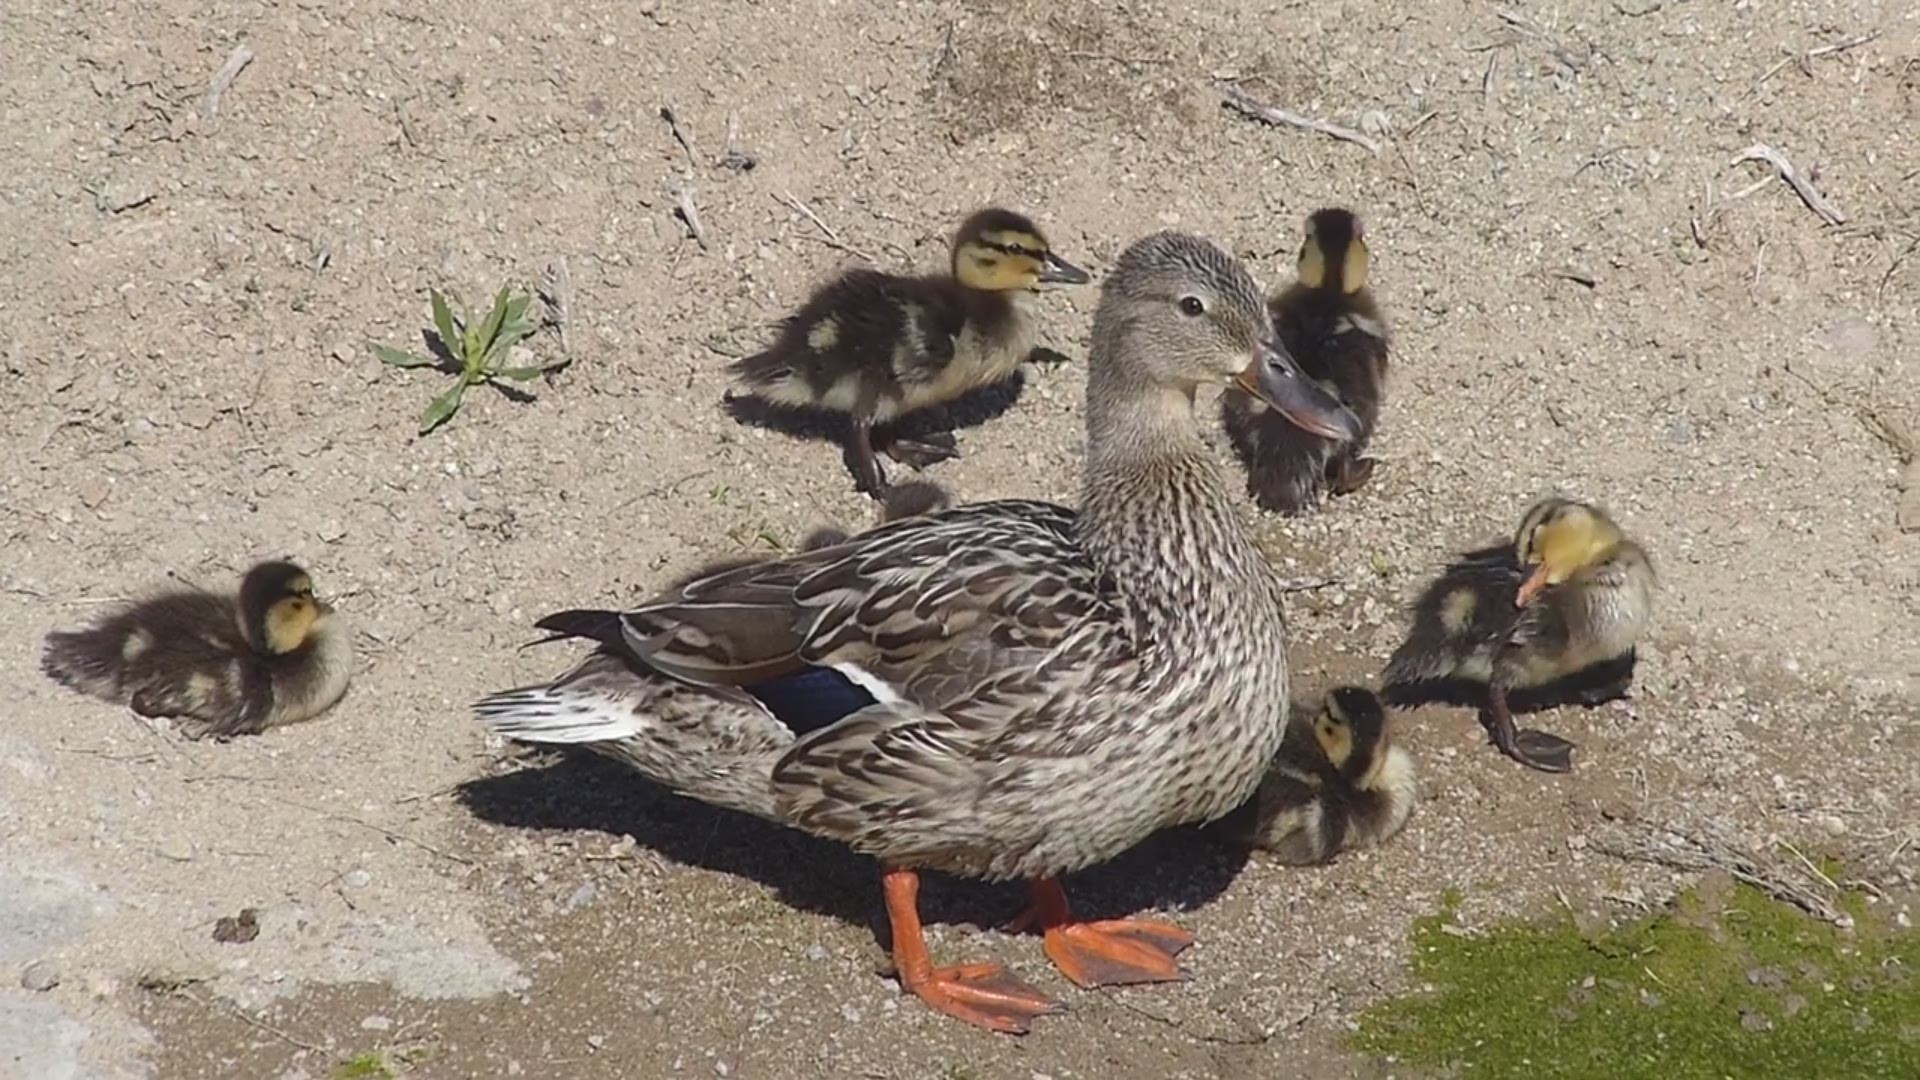 New Born baby ducks in Peoria